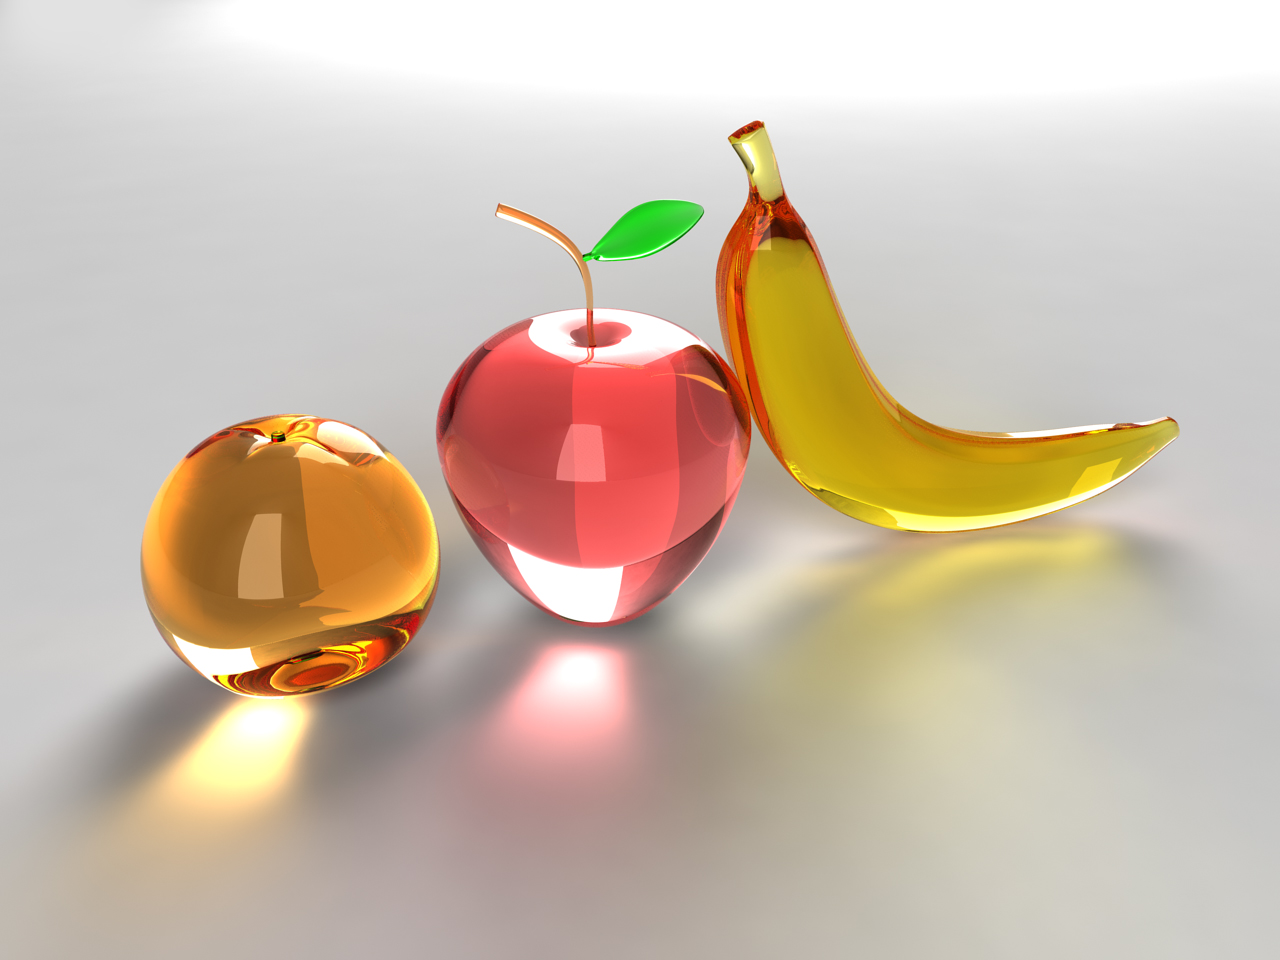 orange apple banana by DivineError on DeviantArt